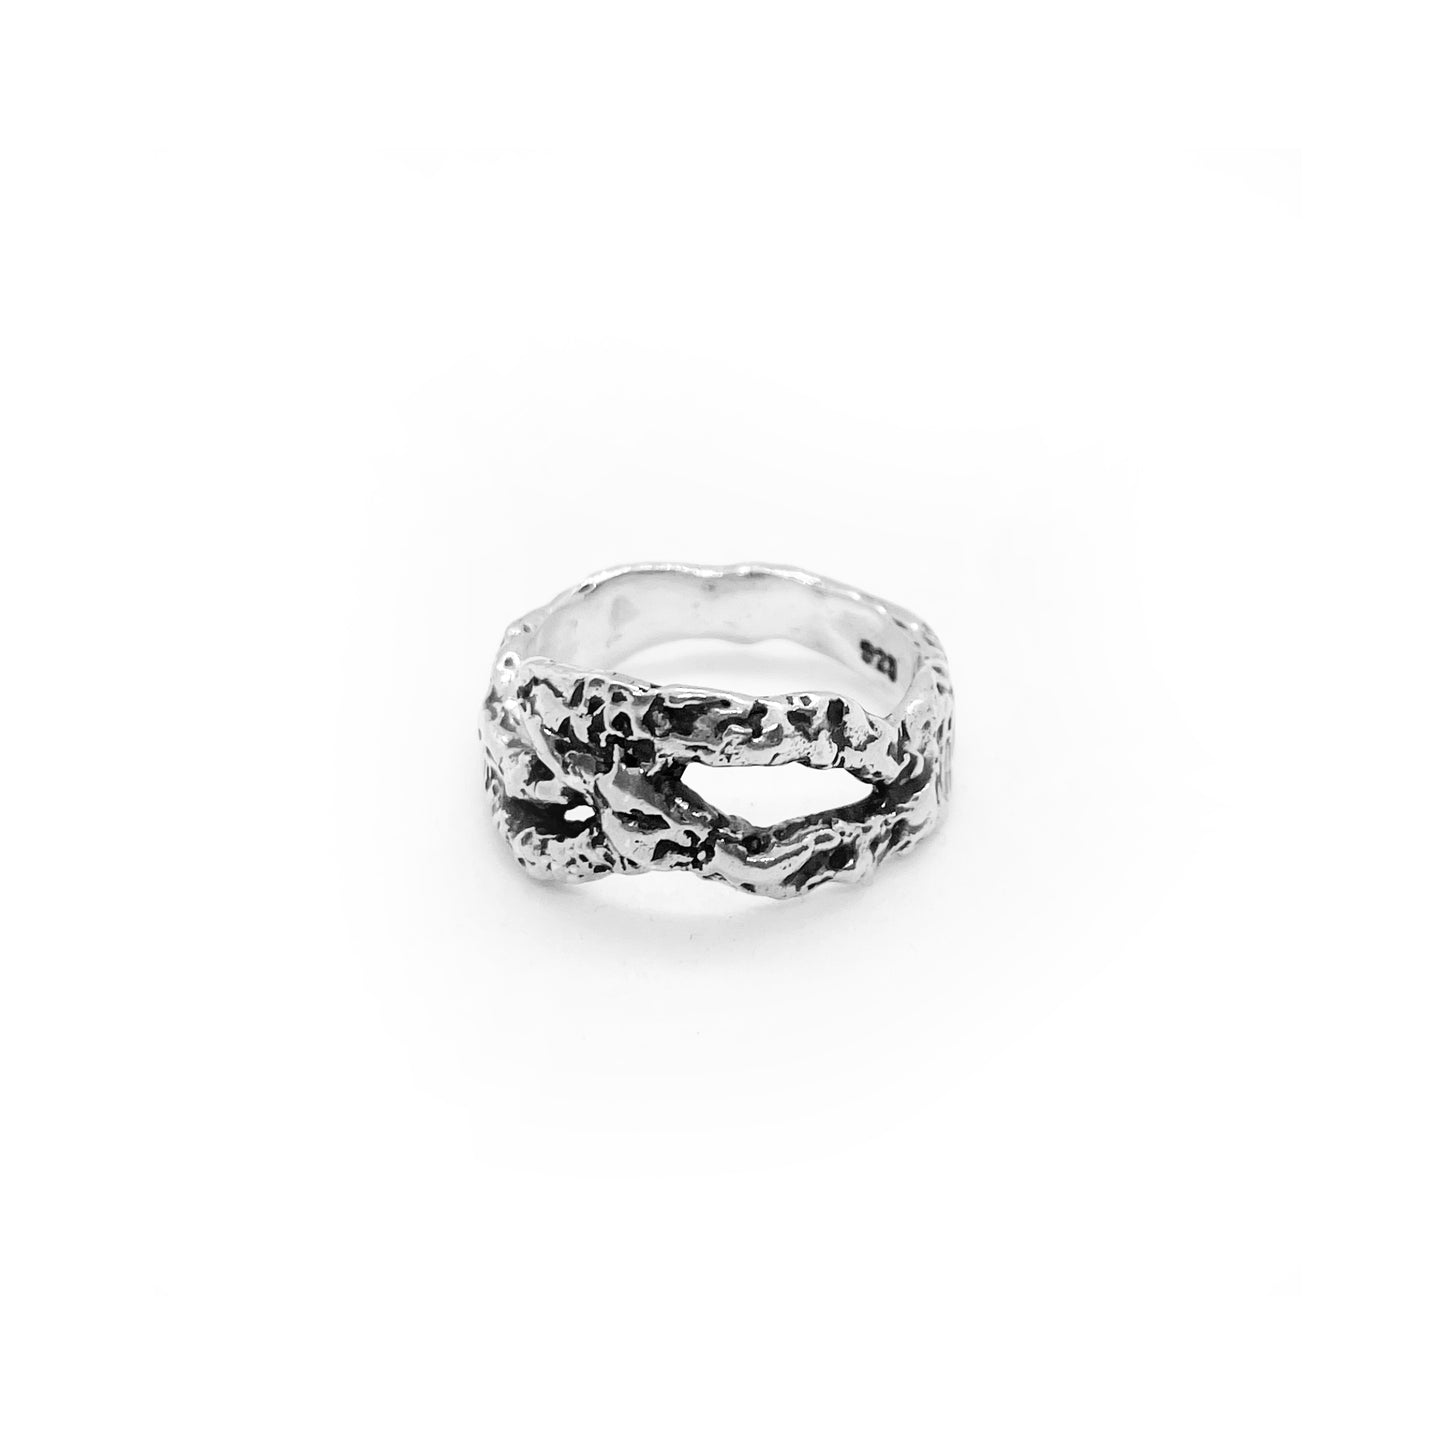 Centaurus Ring - Constellation Ring - Silver Ring High Polish Silver Ring - Antique Silver Ring - Unisex Silver Ring - Statement Ring